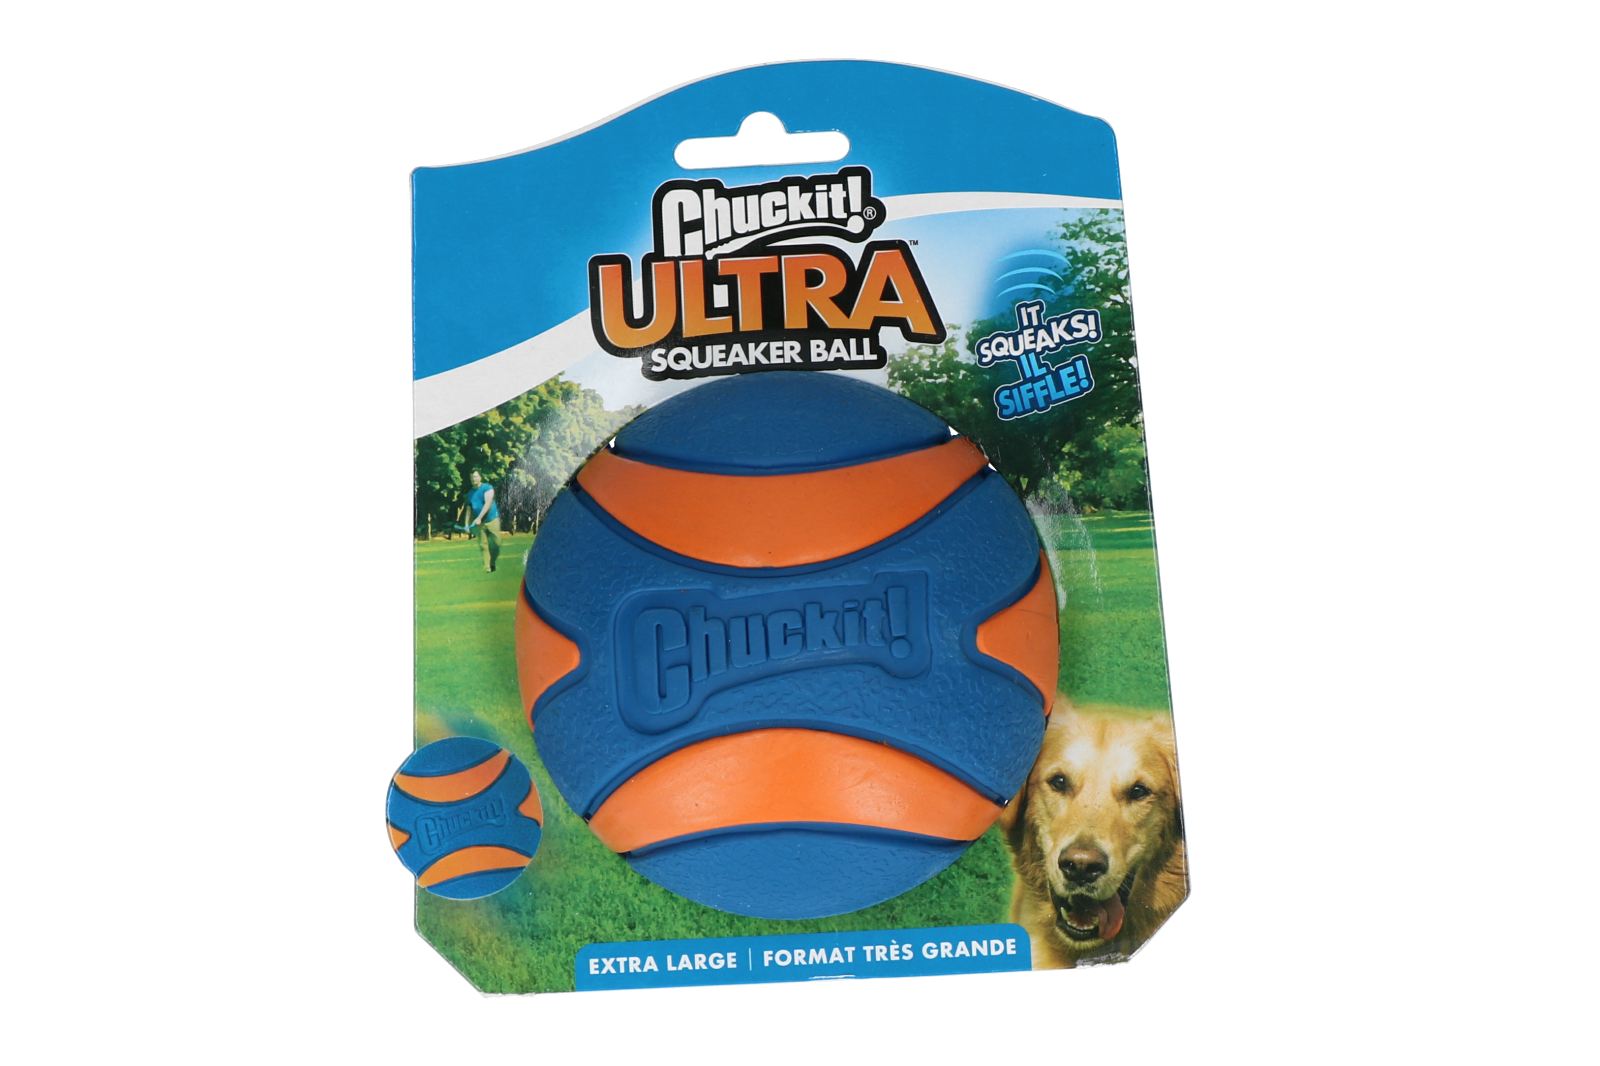 Afbeelding Chuckit Ultra Squeaker Ball Xl 1 Pcs. door K-9 Security dogs